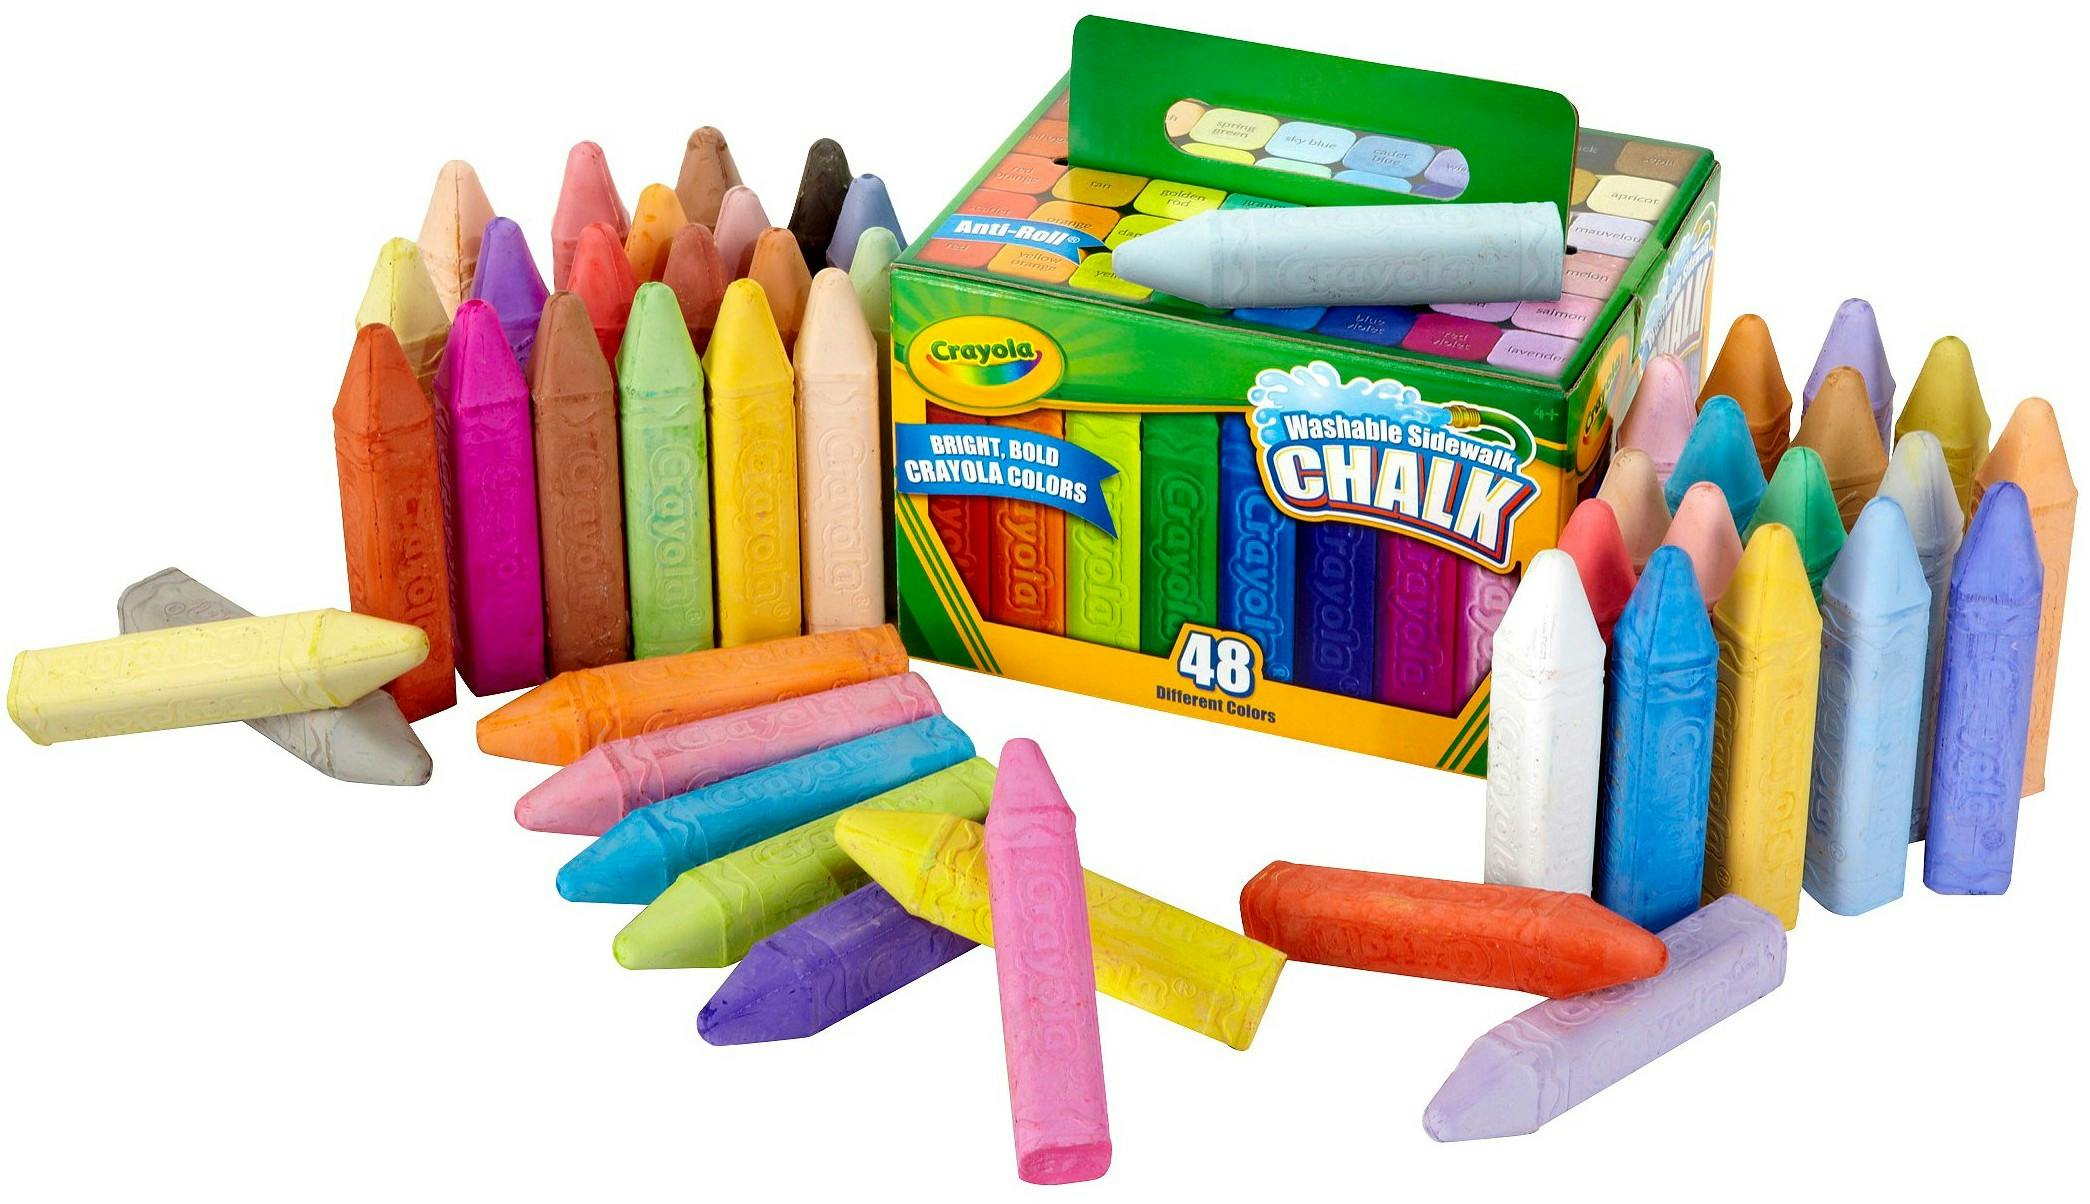 Crayola 48ct Washable Sidewalk Chalk Assorted Colors NEW FREE SHIPPING! 